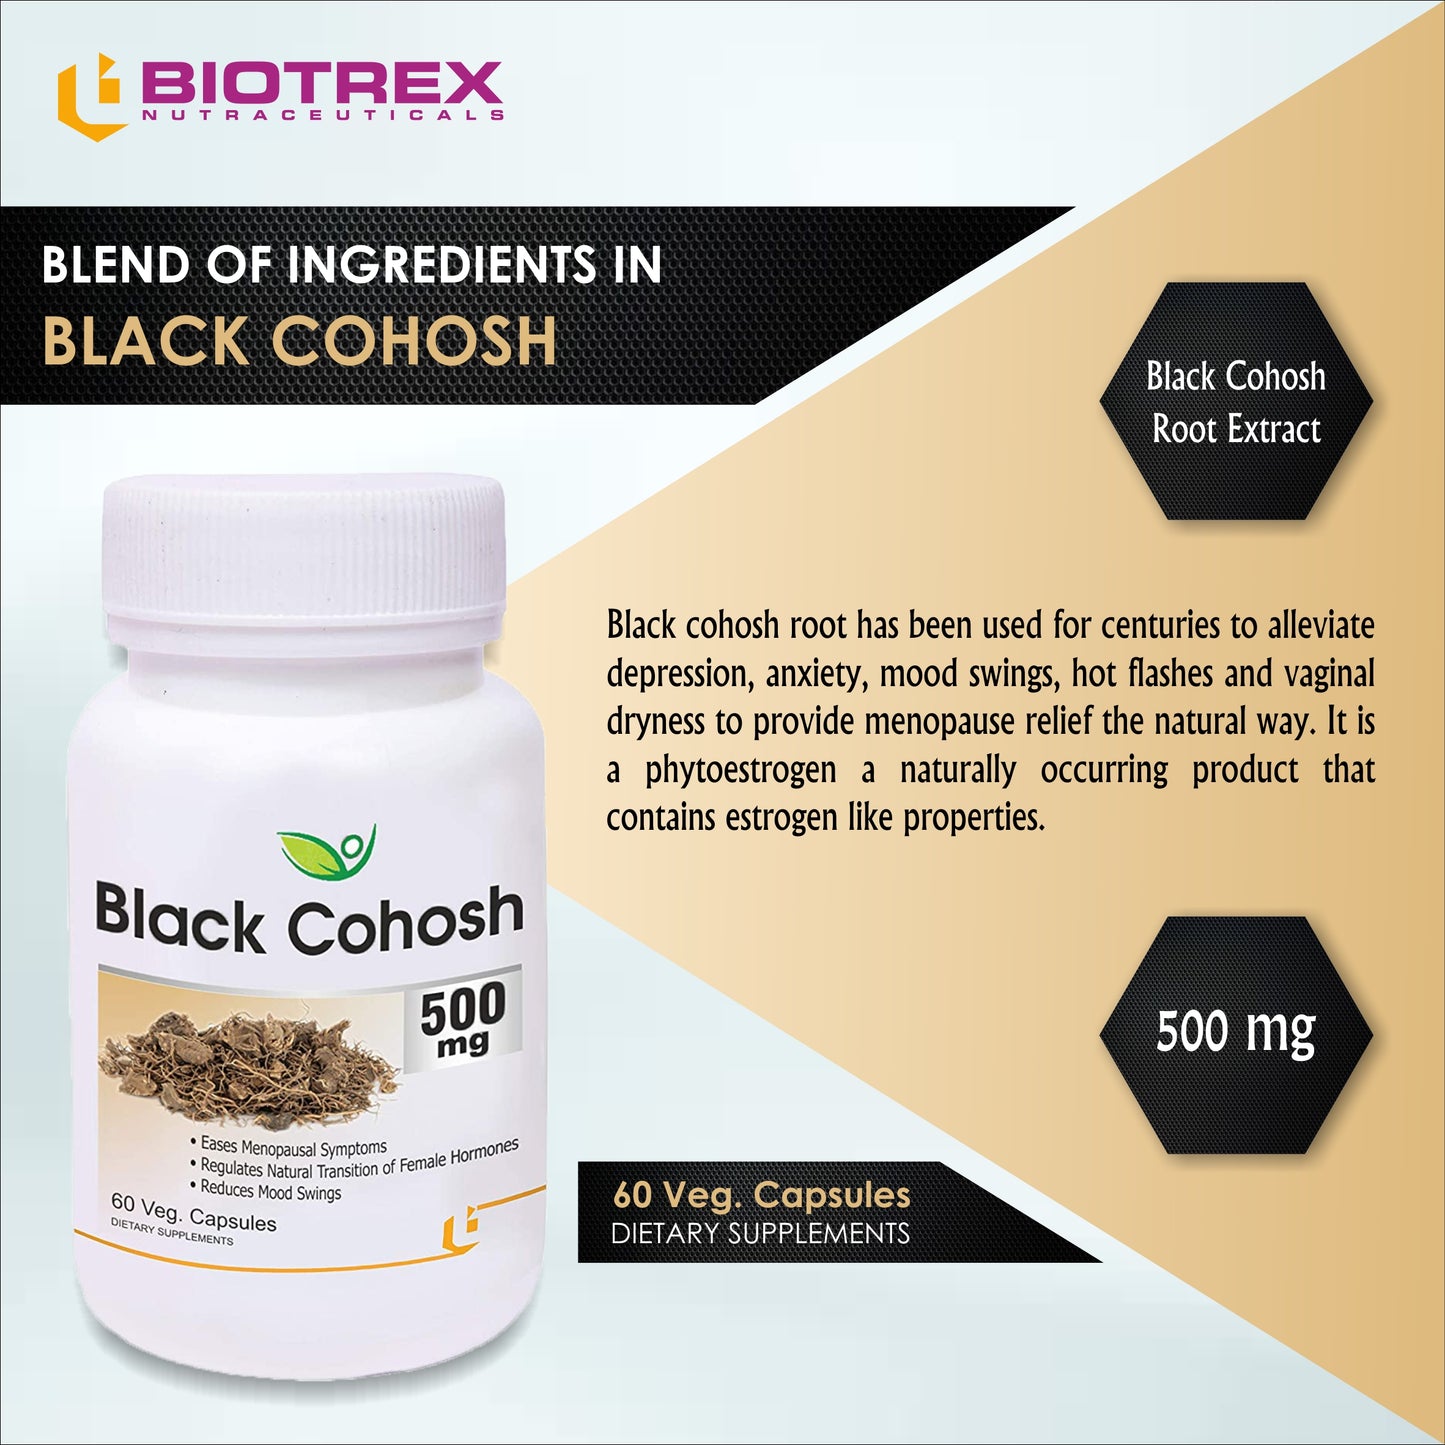 Biotrex Black Cohosh 500mg - 60 Capsules